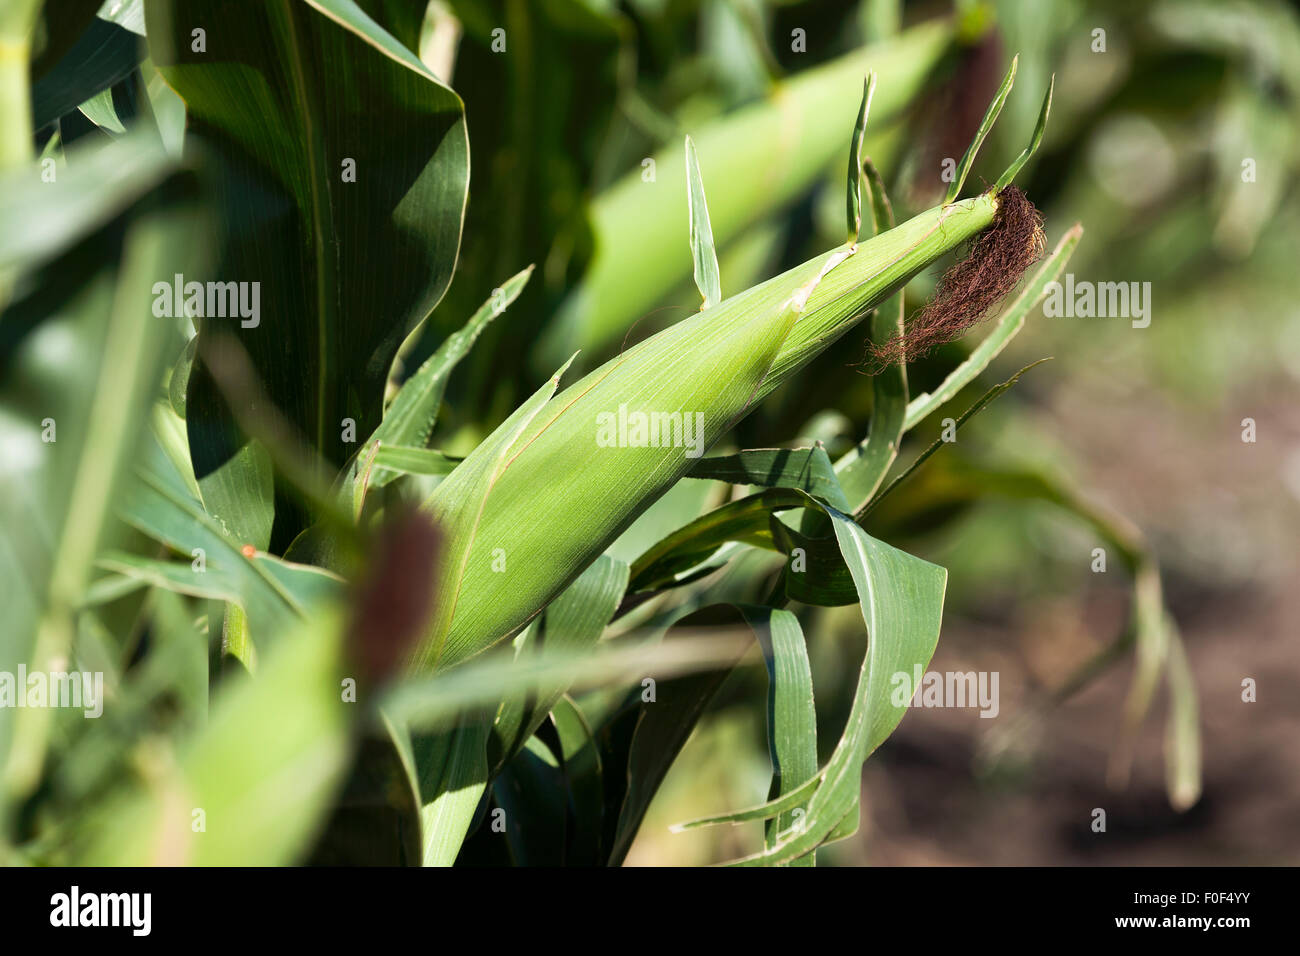 corn field Stock Photo